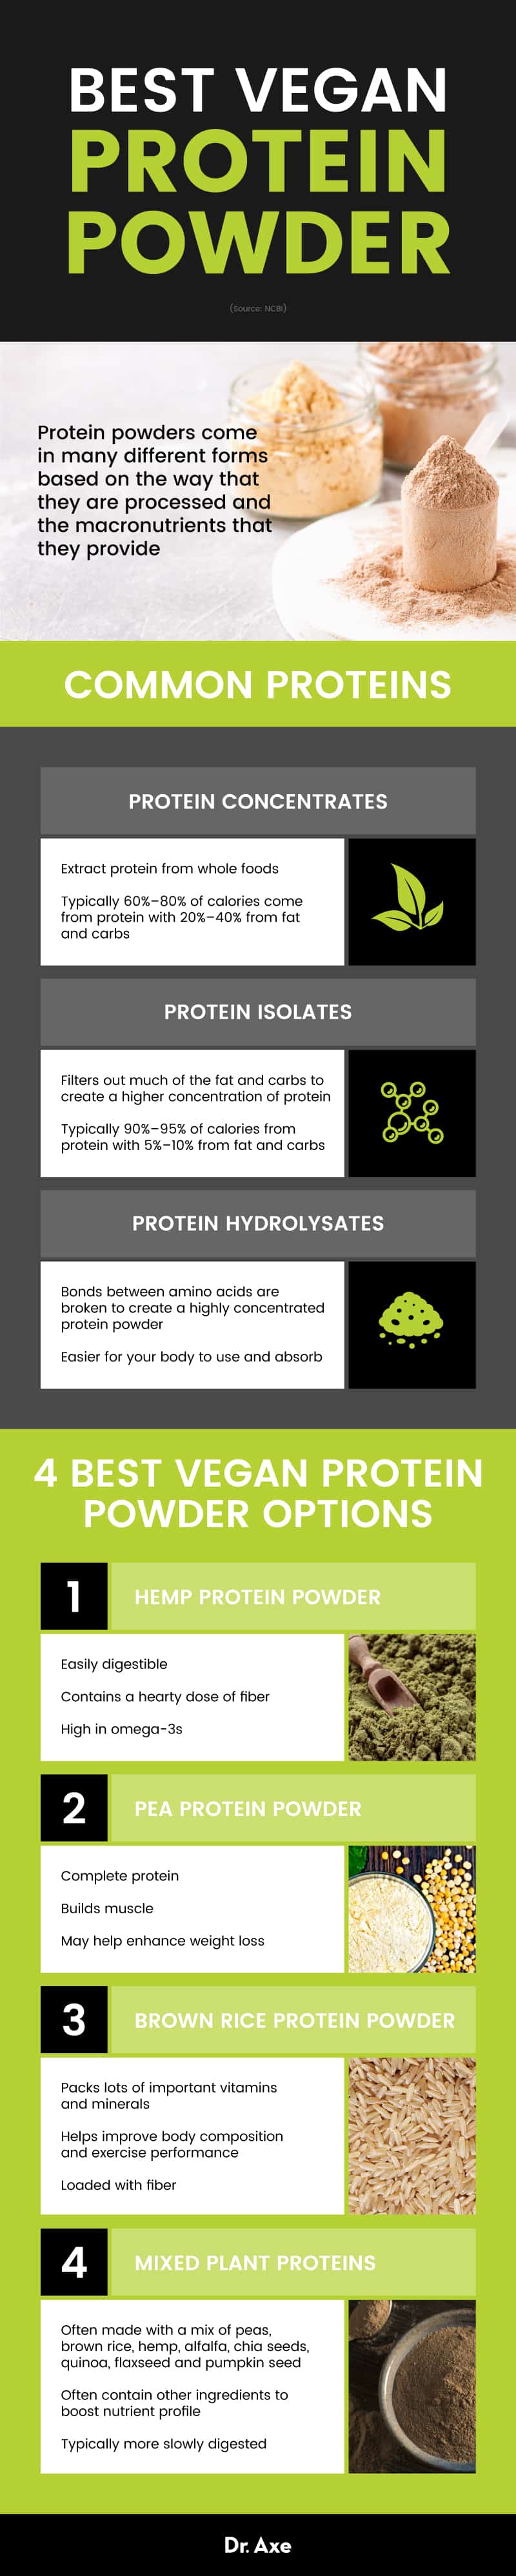 Vegan protein powder - Dr. Axe